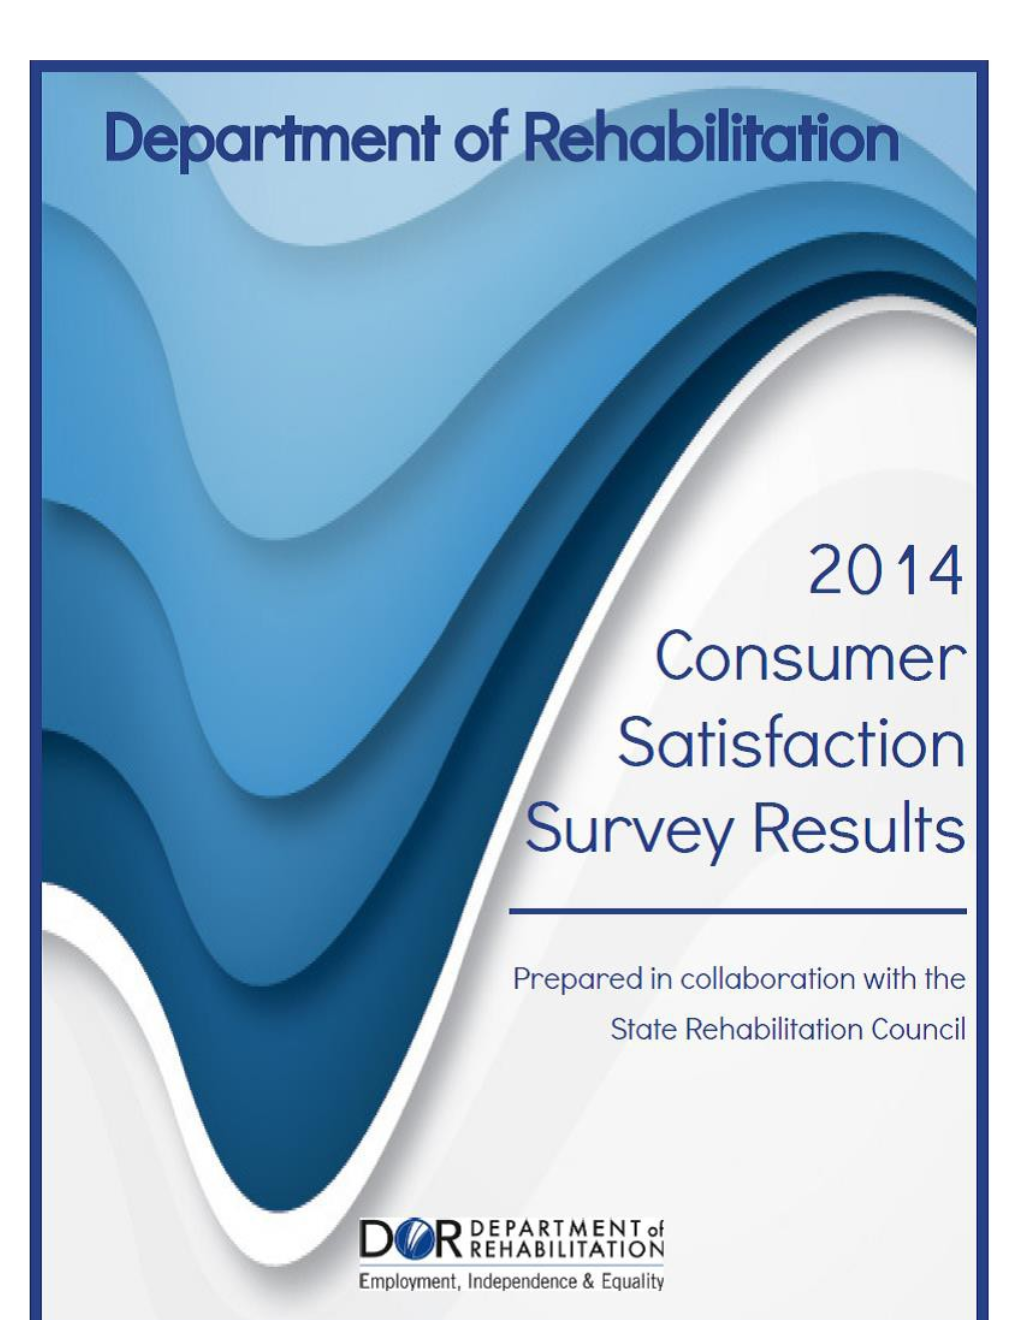 Consumer Satisfaction Survey Results